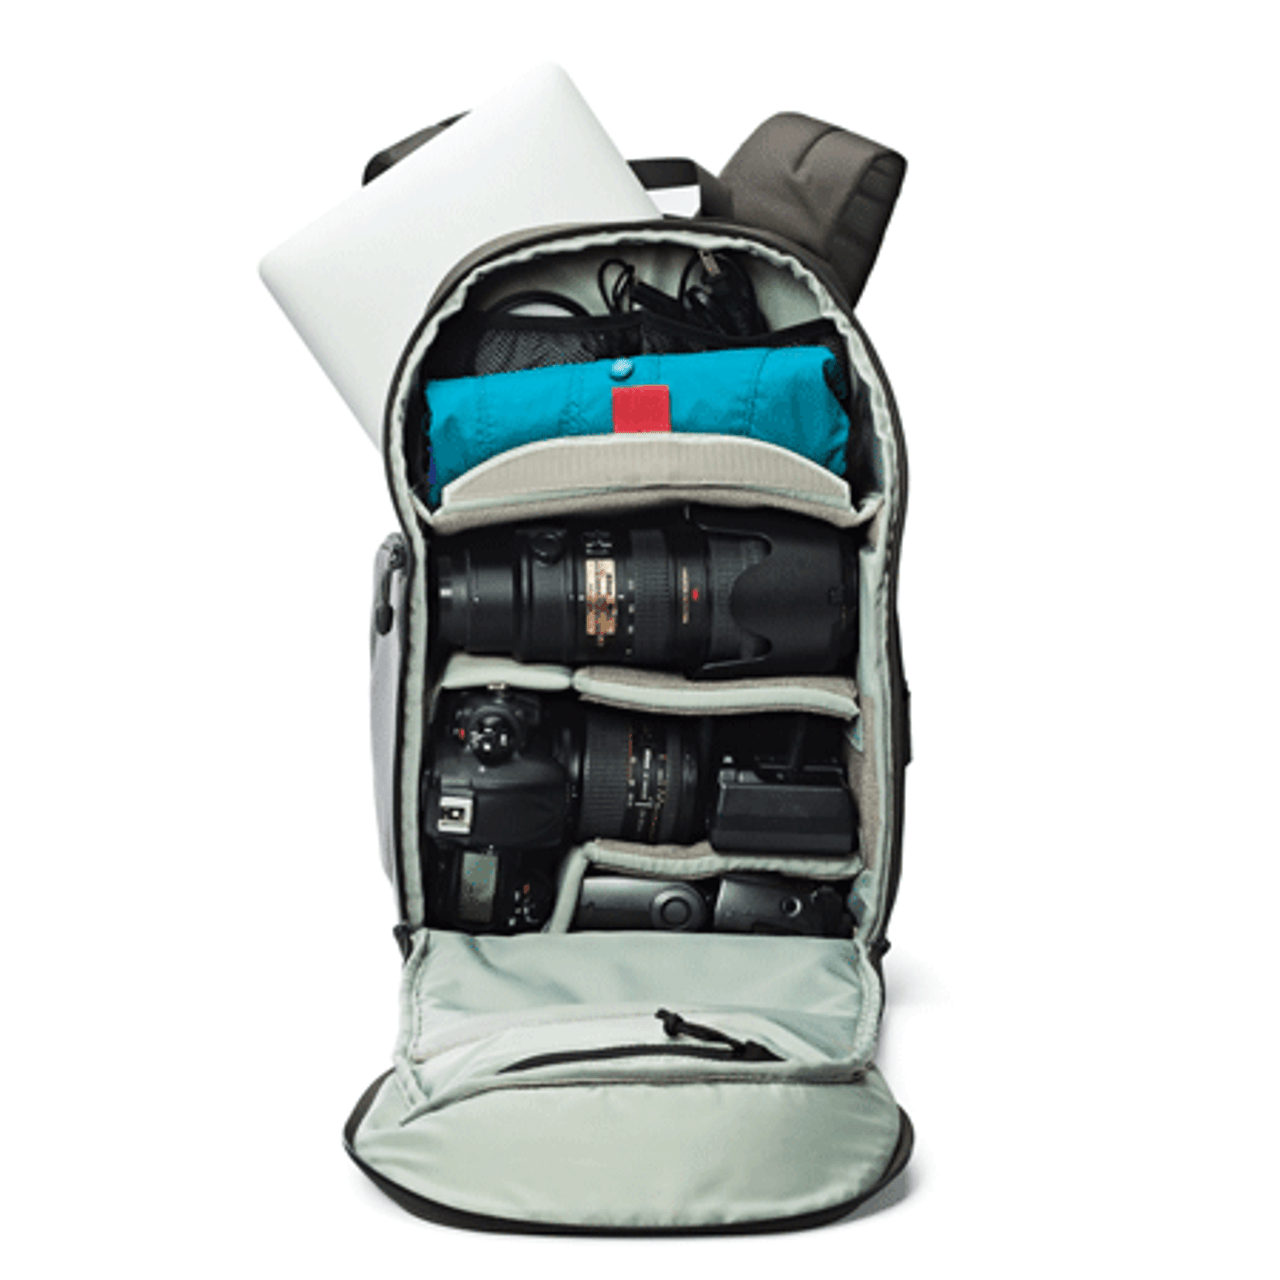 Lowepro Transit Backpack 350 AW